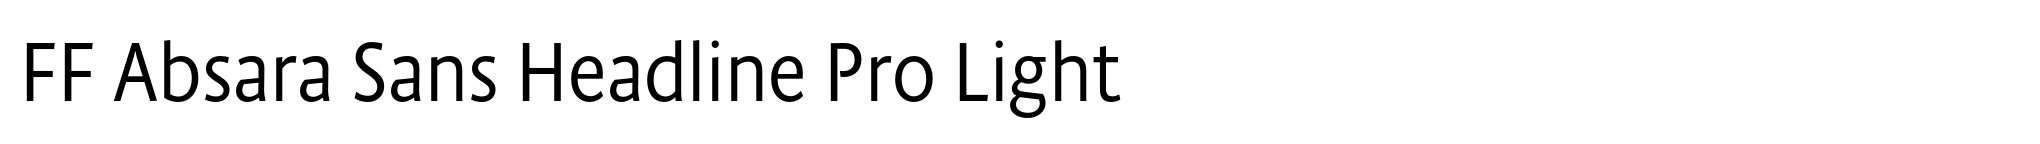 FF Absara Sans Headline Pro Light image